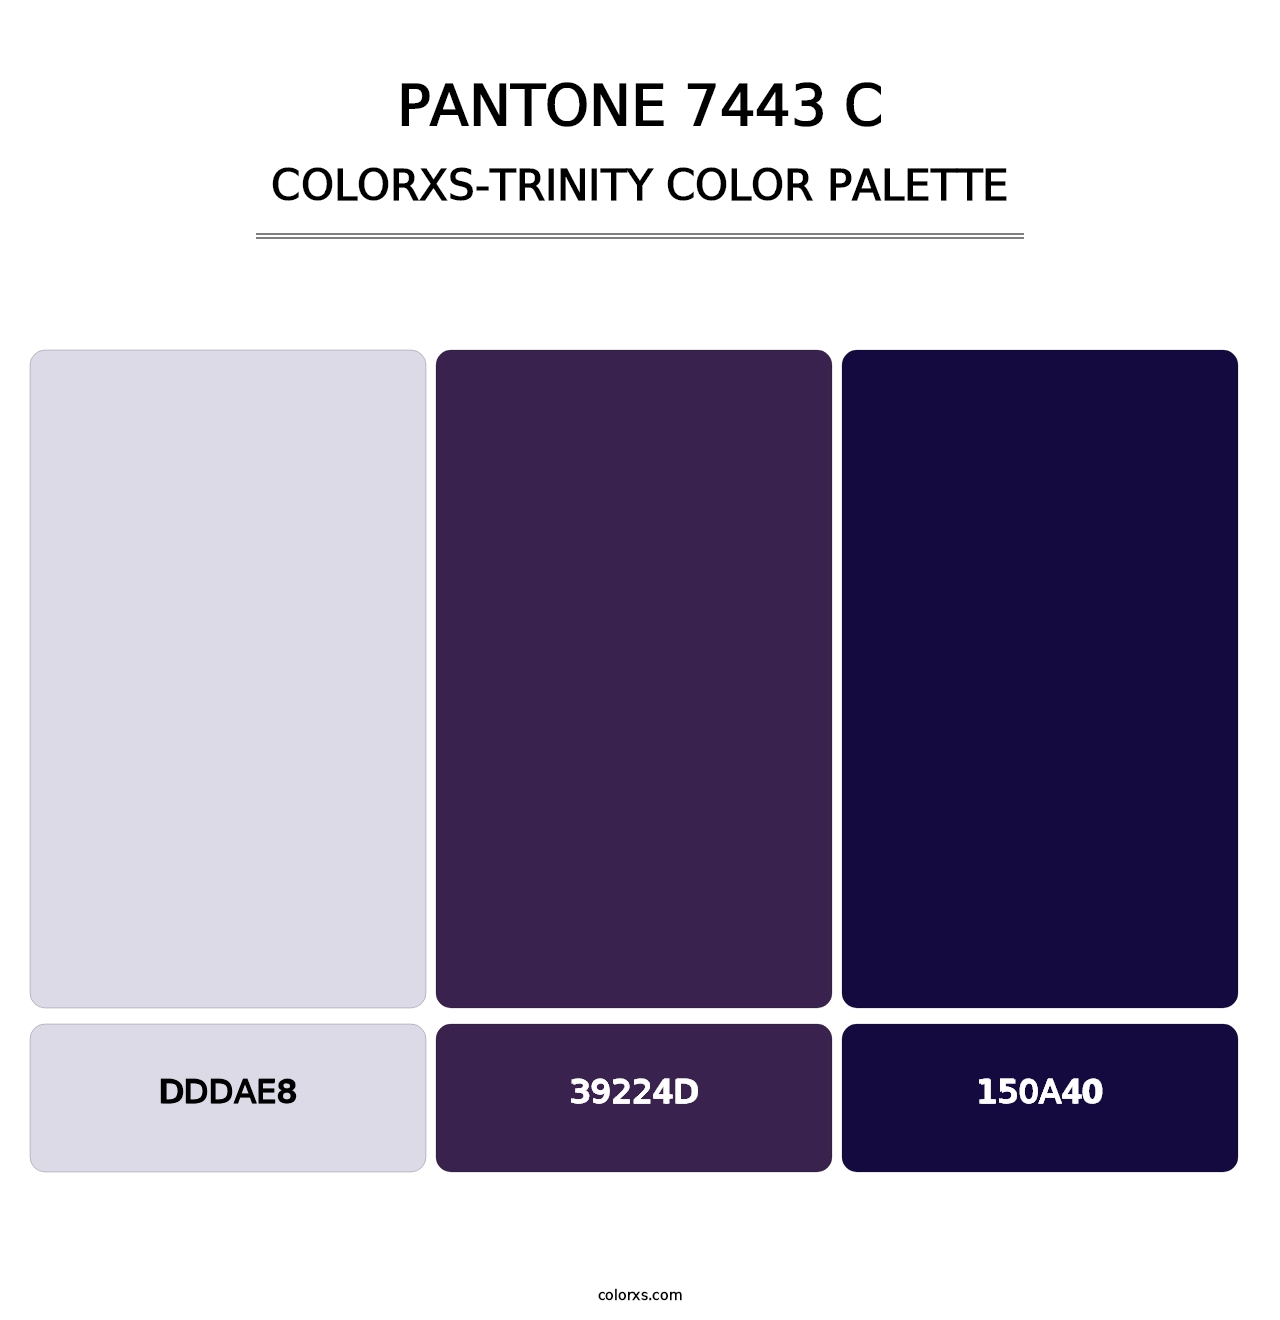 PANTONE 7443 C - Colorxs Trinity Palette